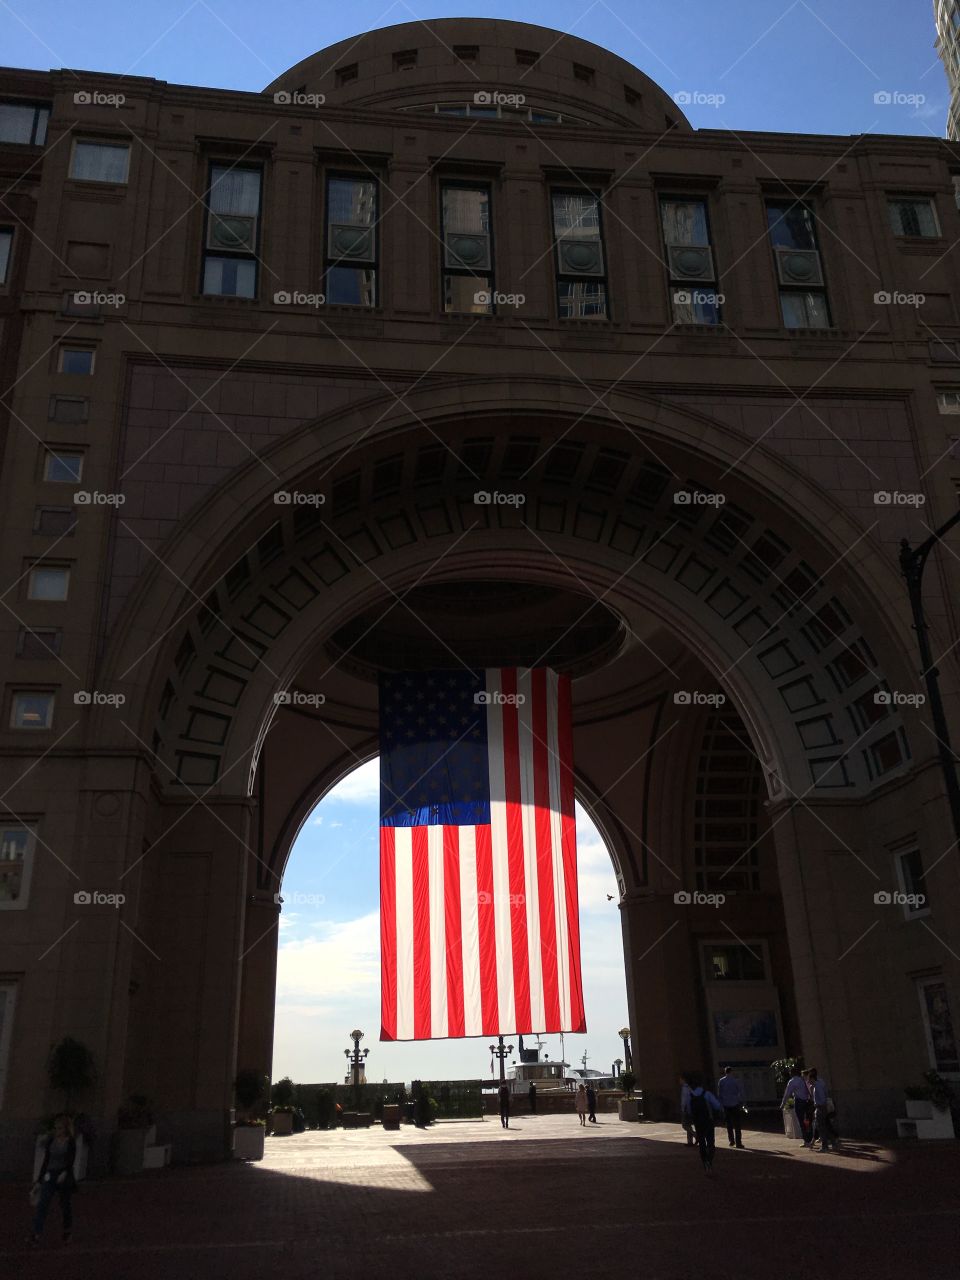 Big American flag - Boston harbor